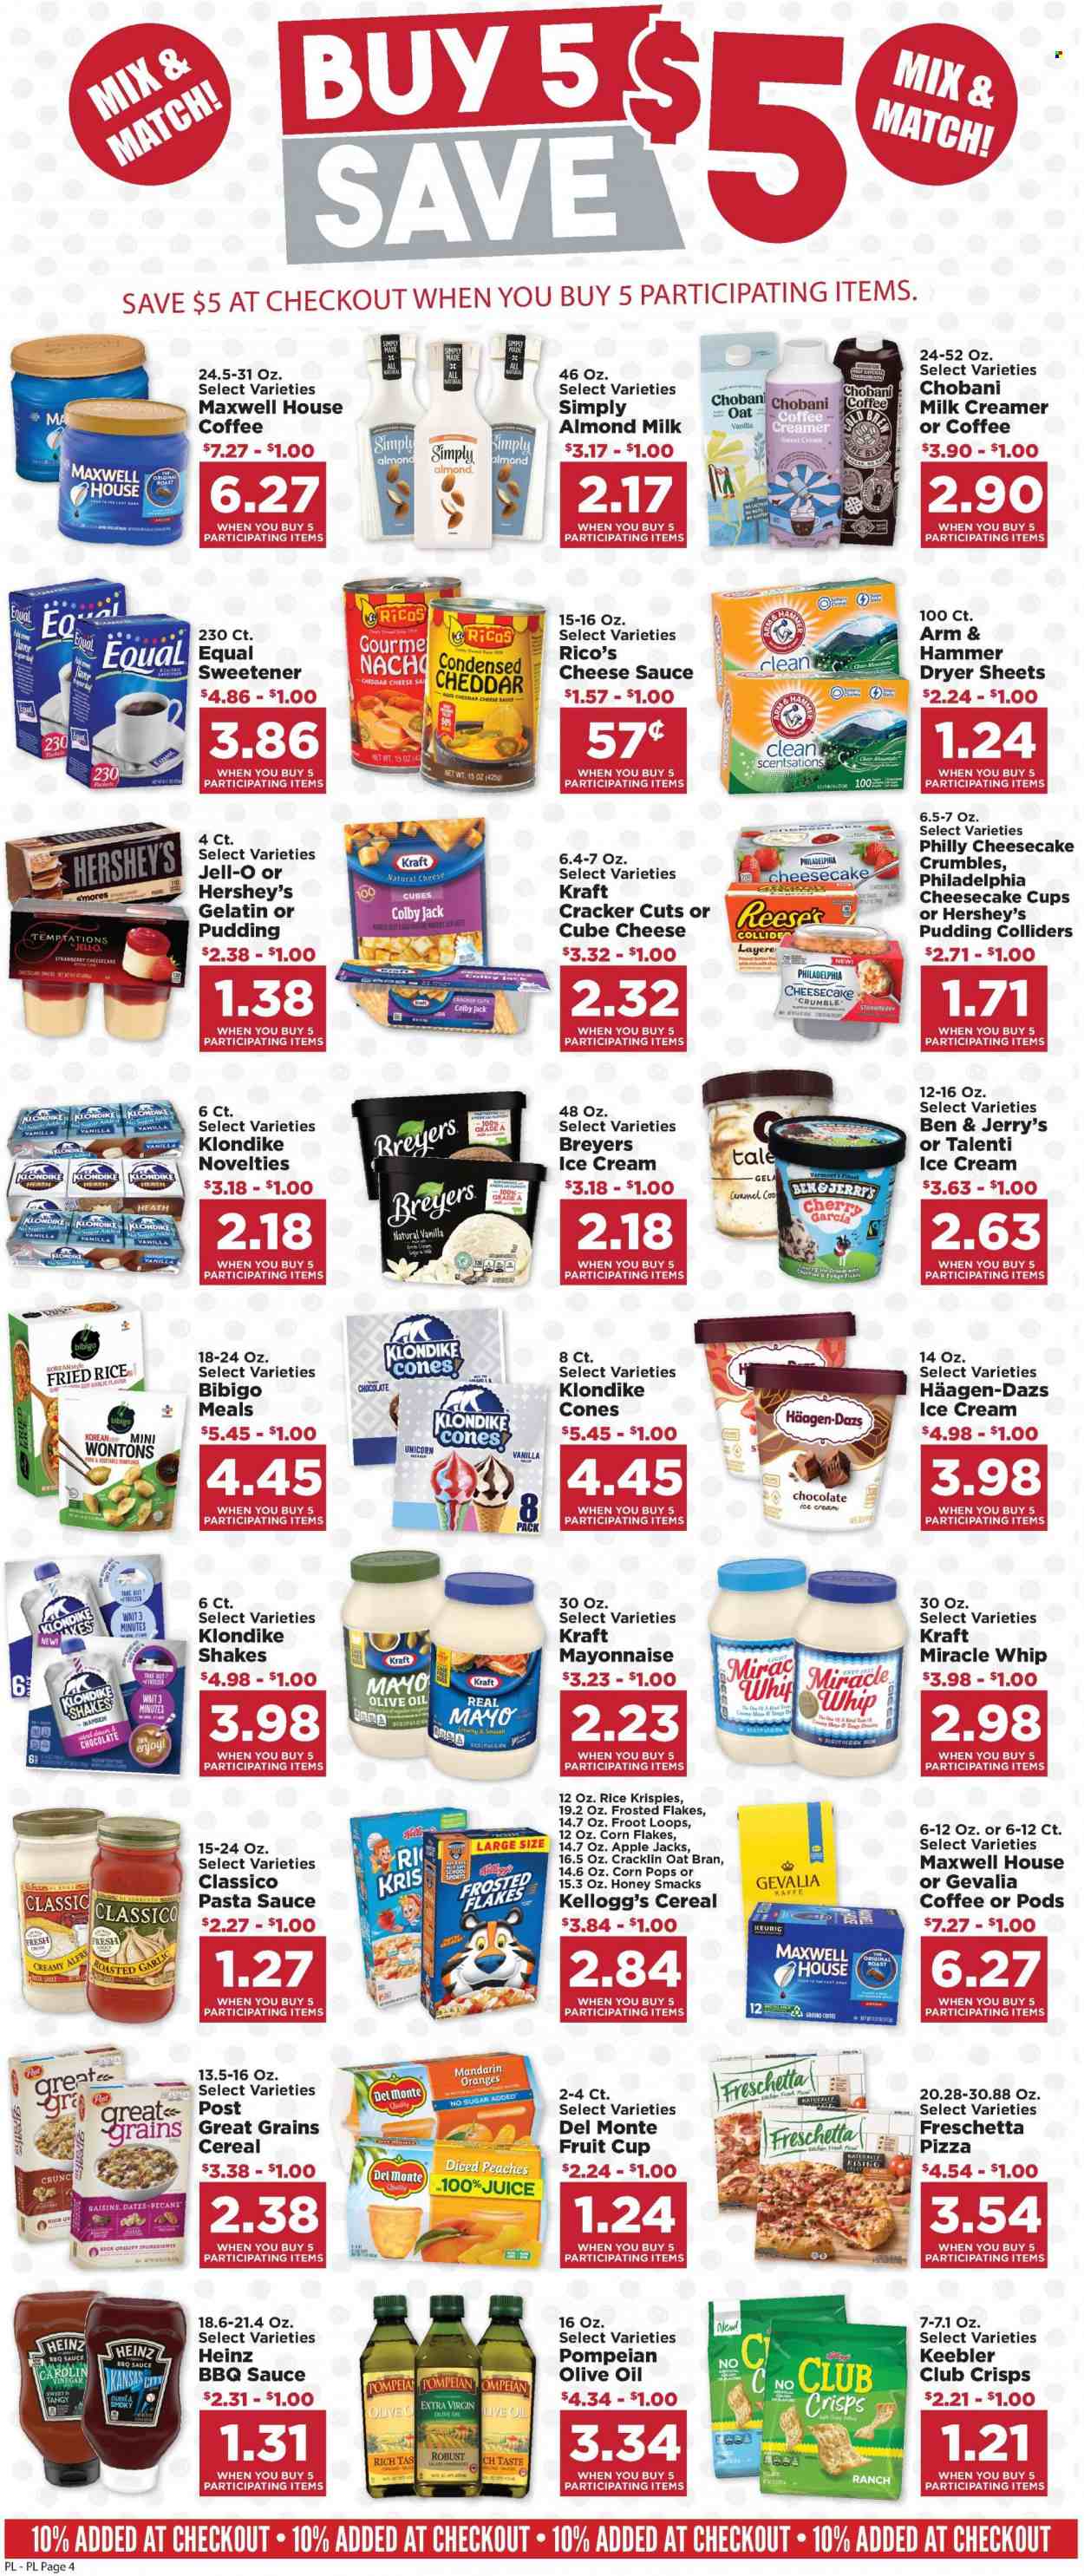 Price Less Foods ad  - 08.10.2022 - 08.16.2022.